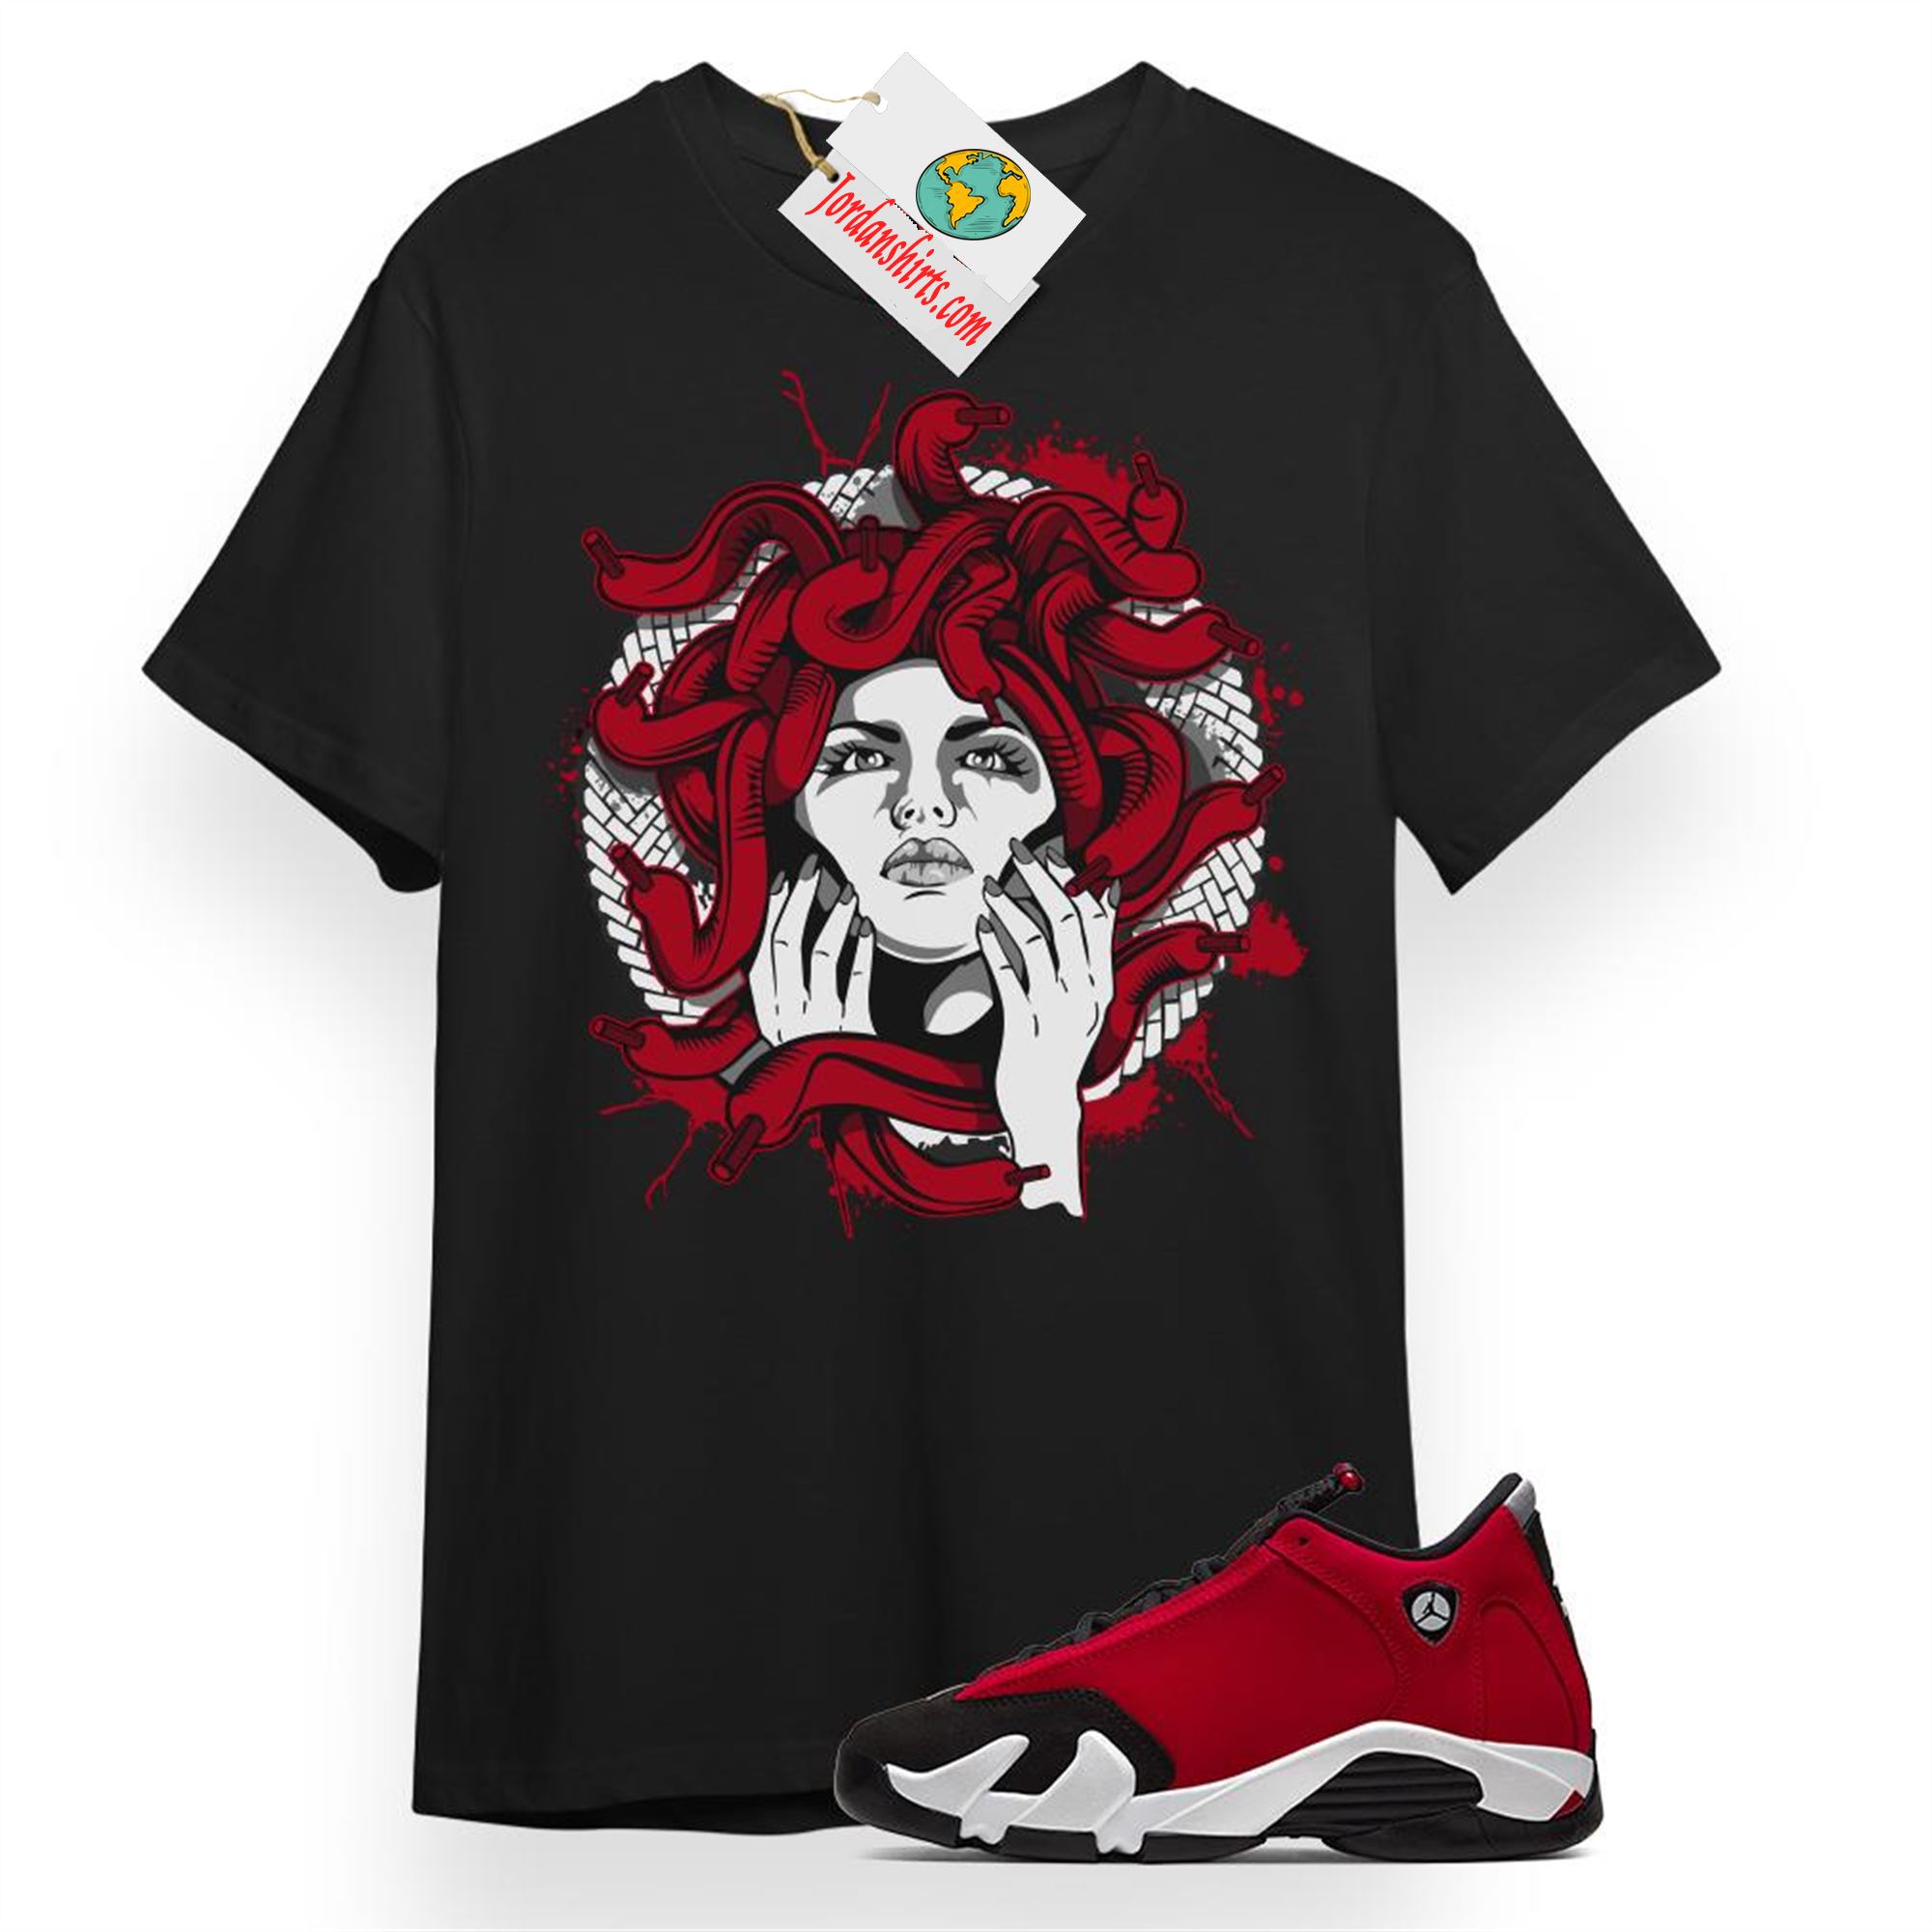 Jordan 14 Shirt, Medusa Black T-shirt Air Jordan 14 Gym Red 14s Plus Size Up To 5xl